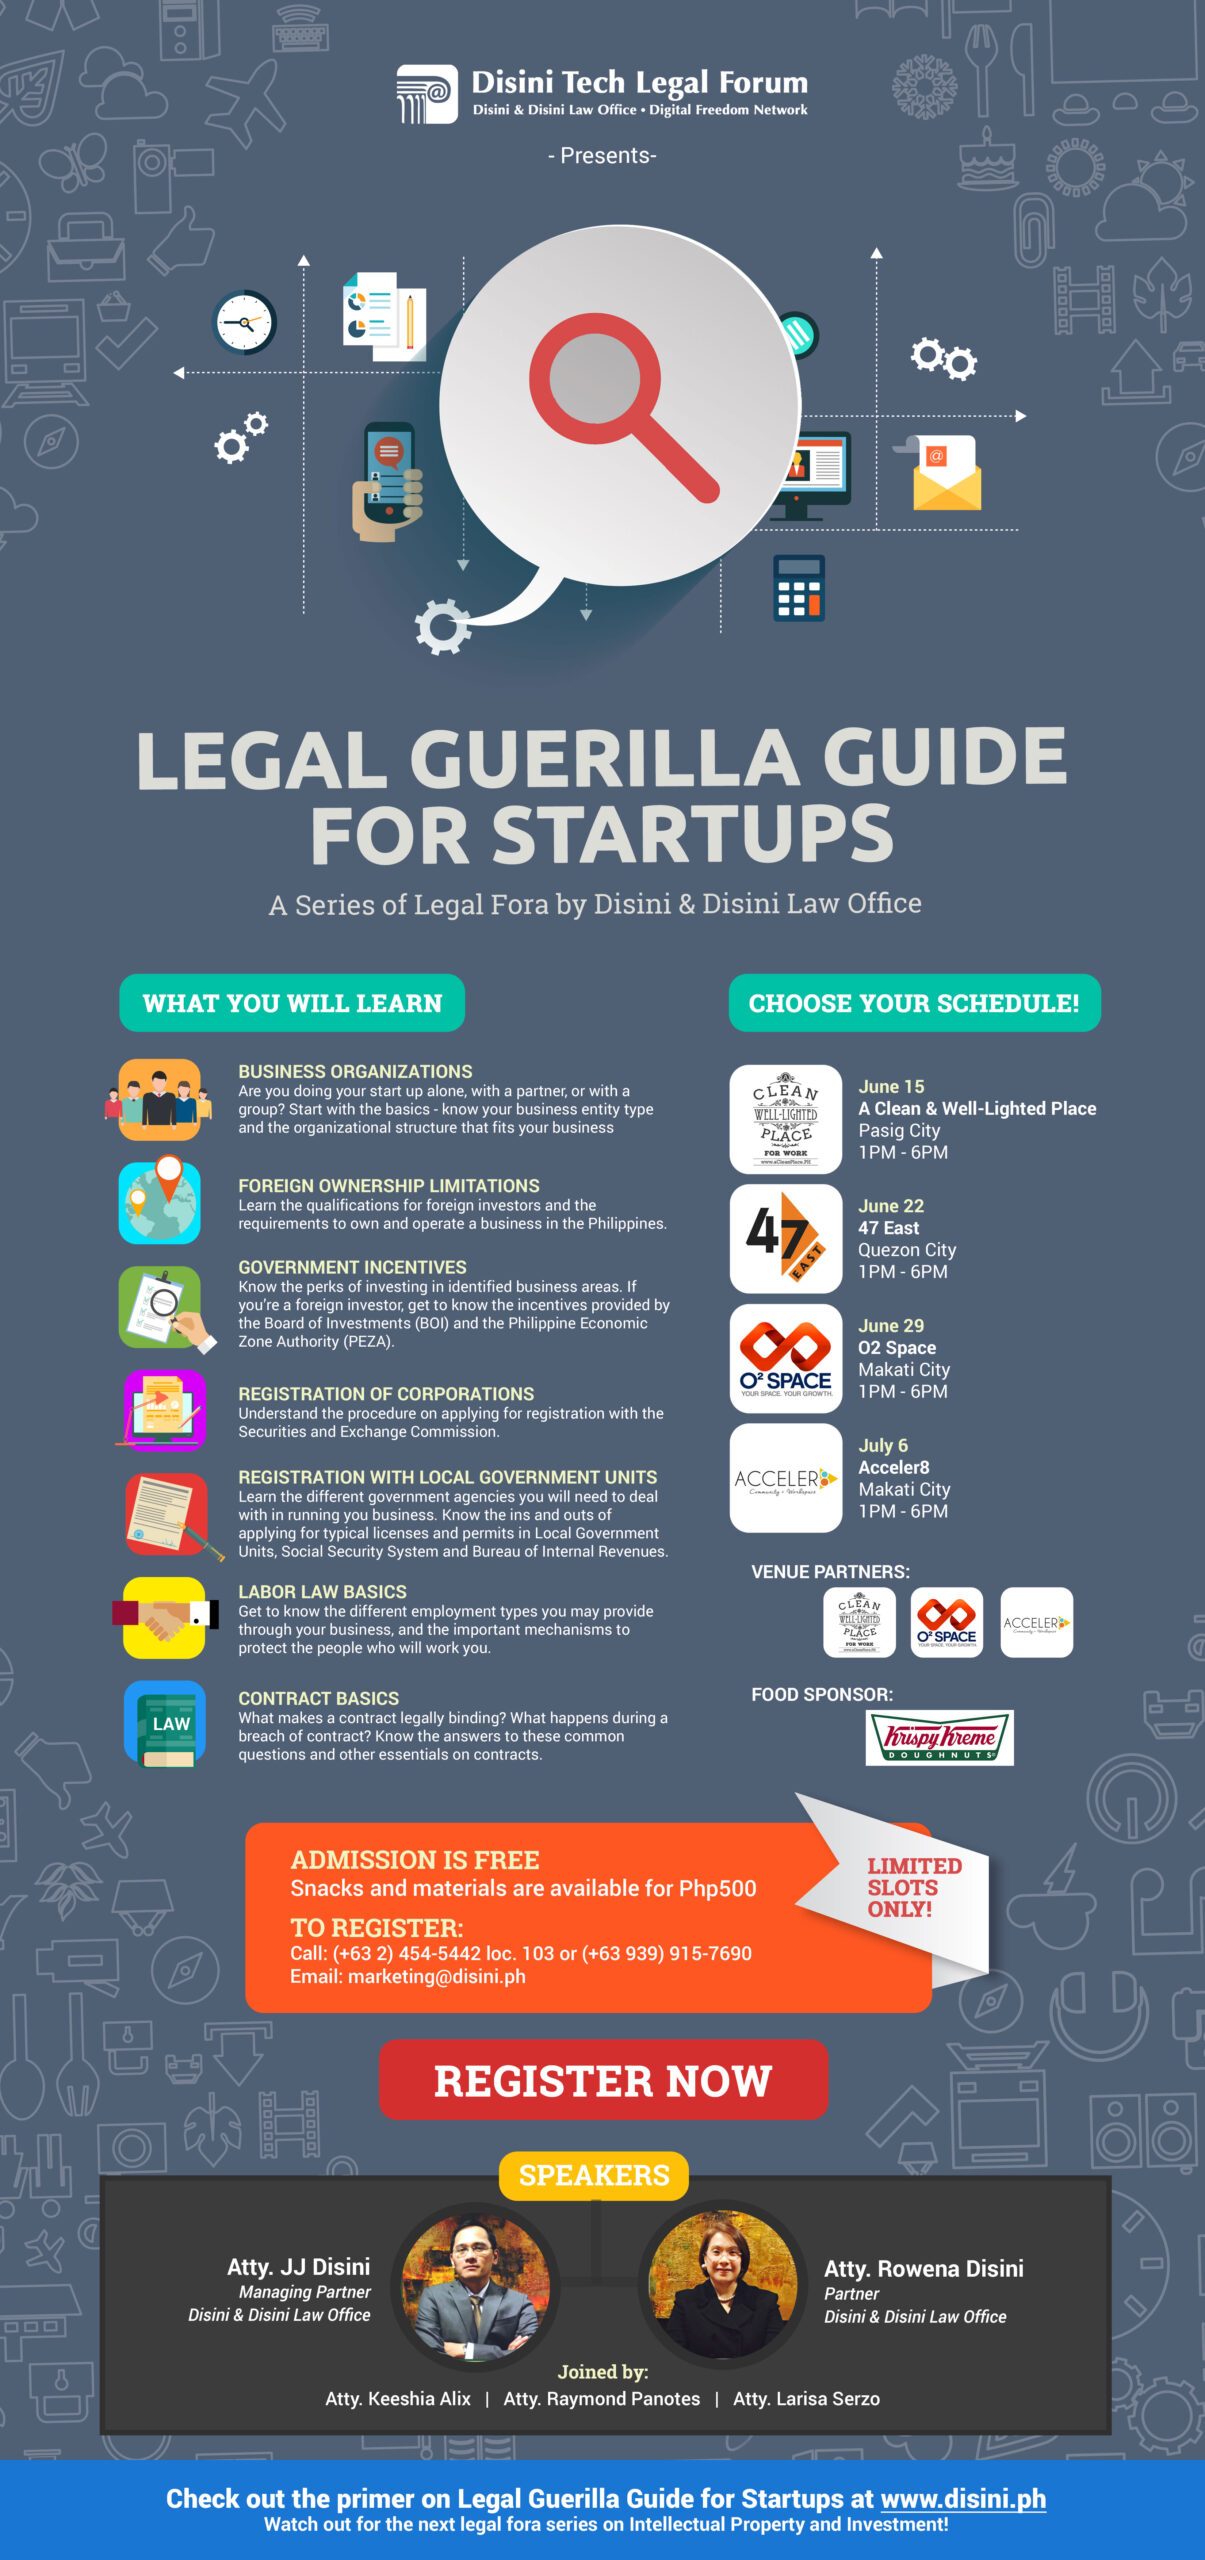 Legal fora on startups to start June 15